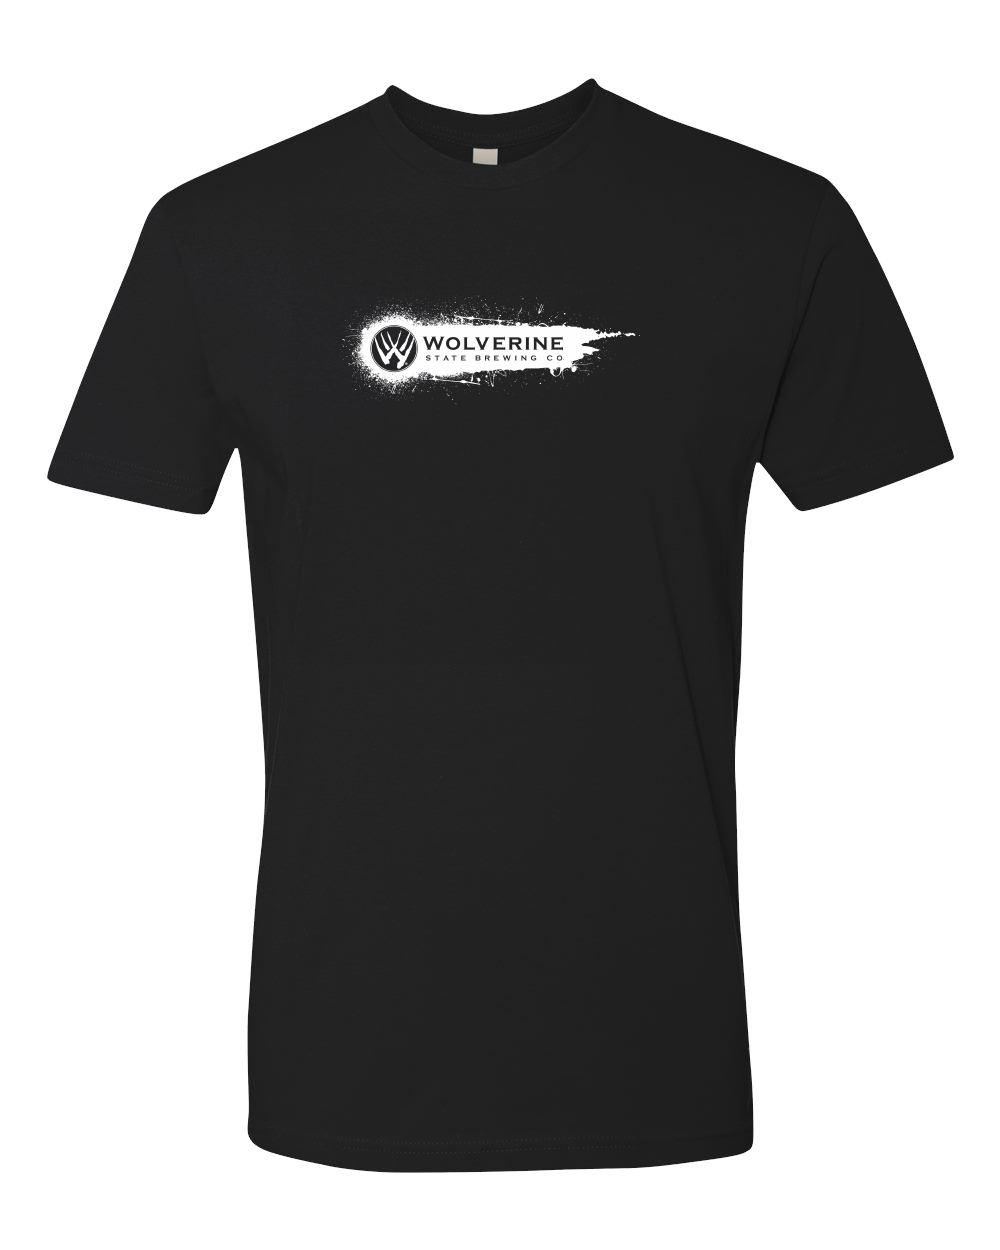 Premium Short Sleeve Crew Black Wolverine State - Splat Logo Design T-shirt